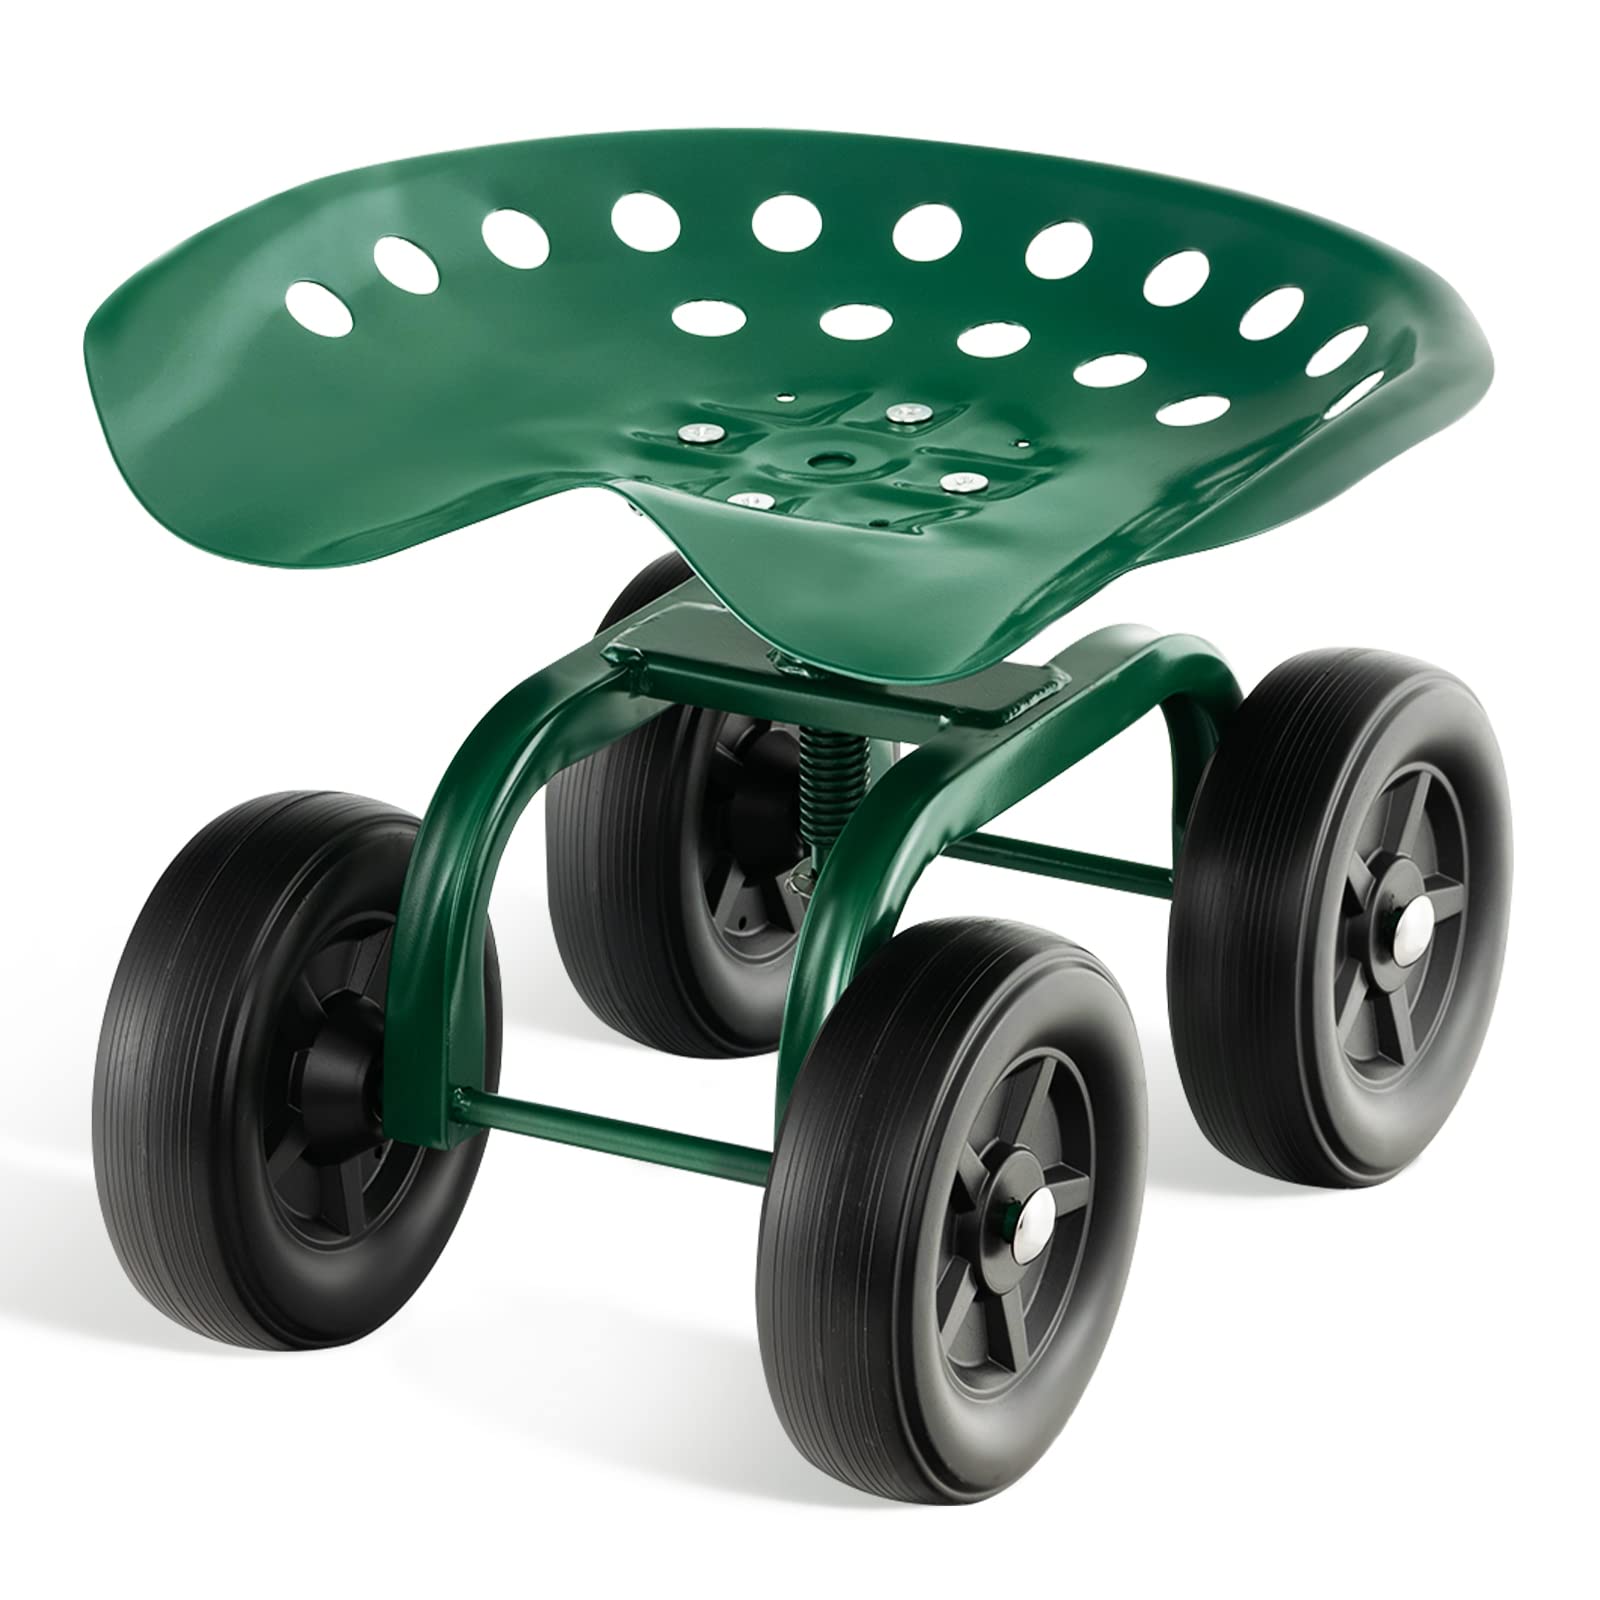 Giantex Garden Cart, Rolling Workseat with 4 Wheels, Garden Stool 360-degree Swivel Work Seat & Adjustable Heigh